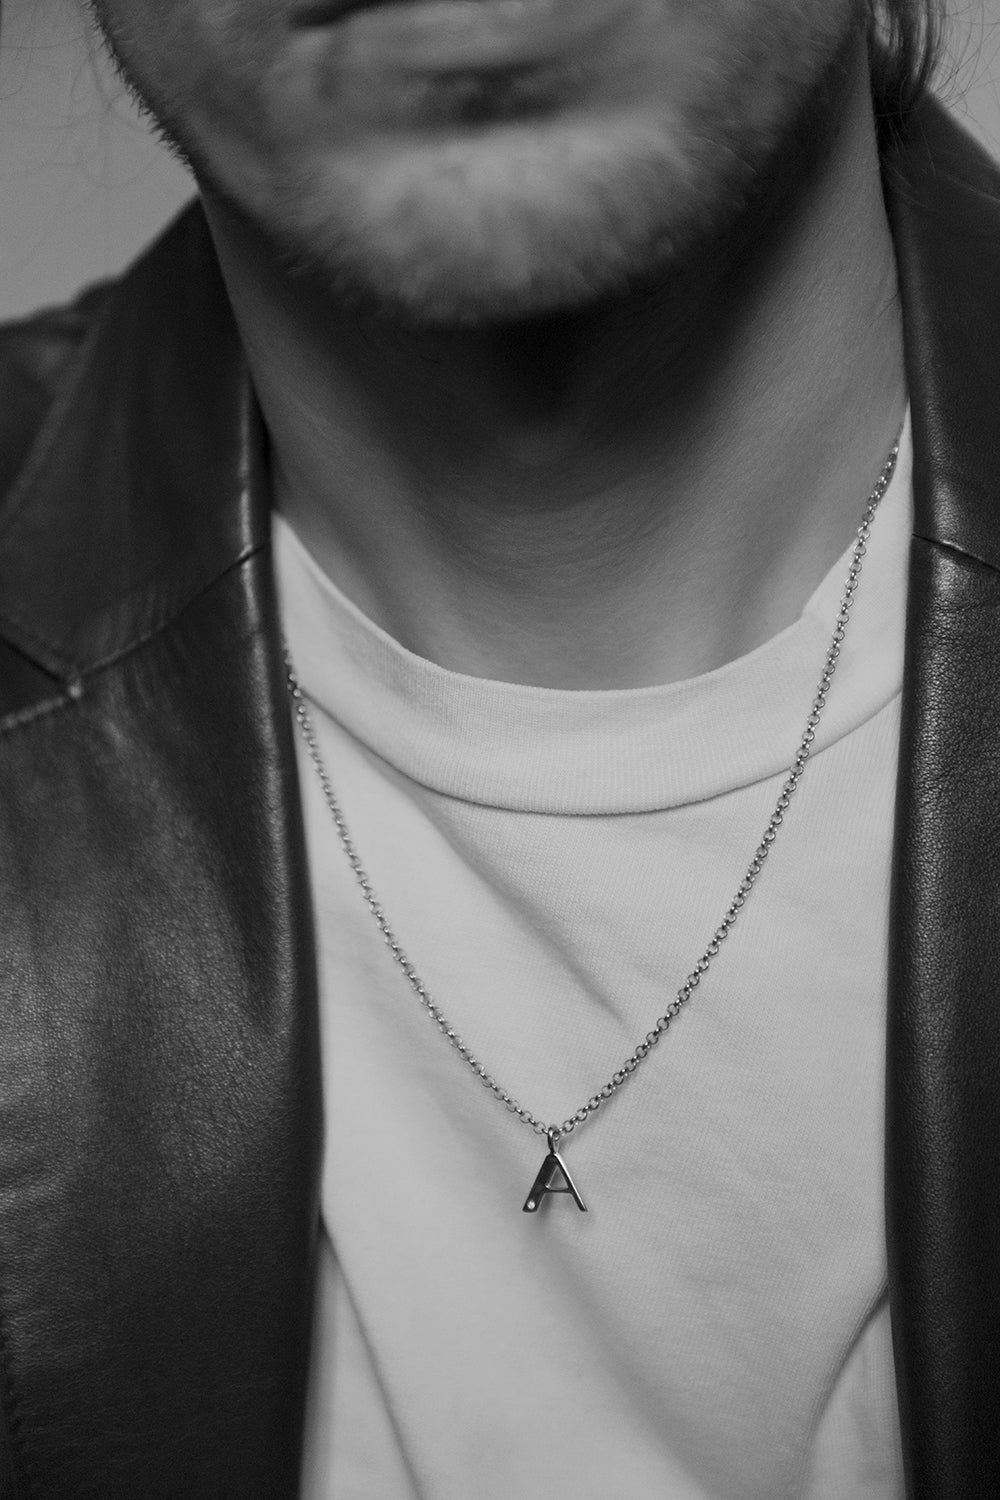 LETTER necklace